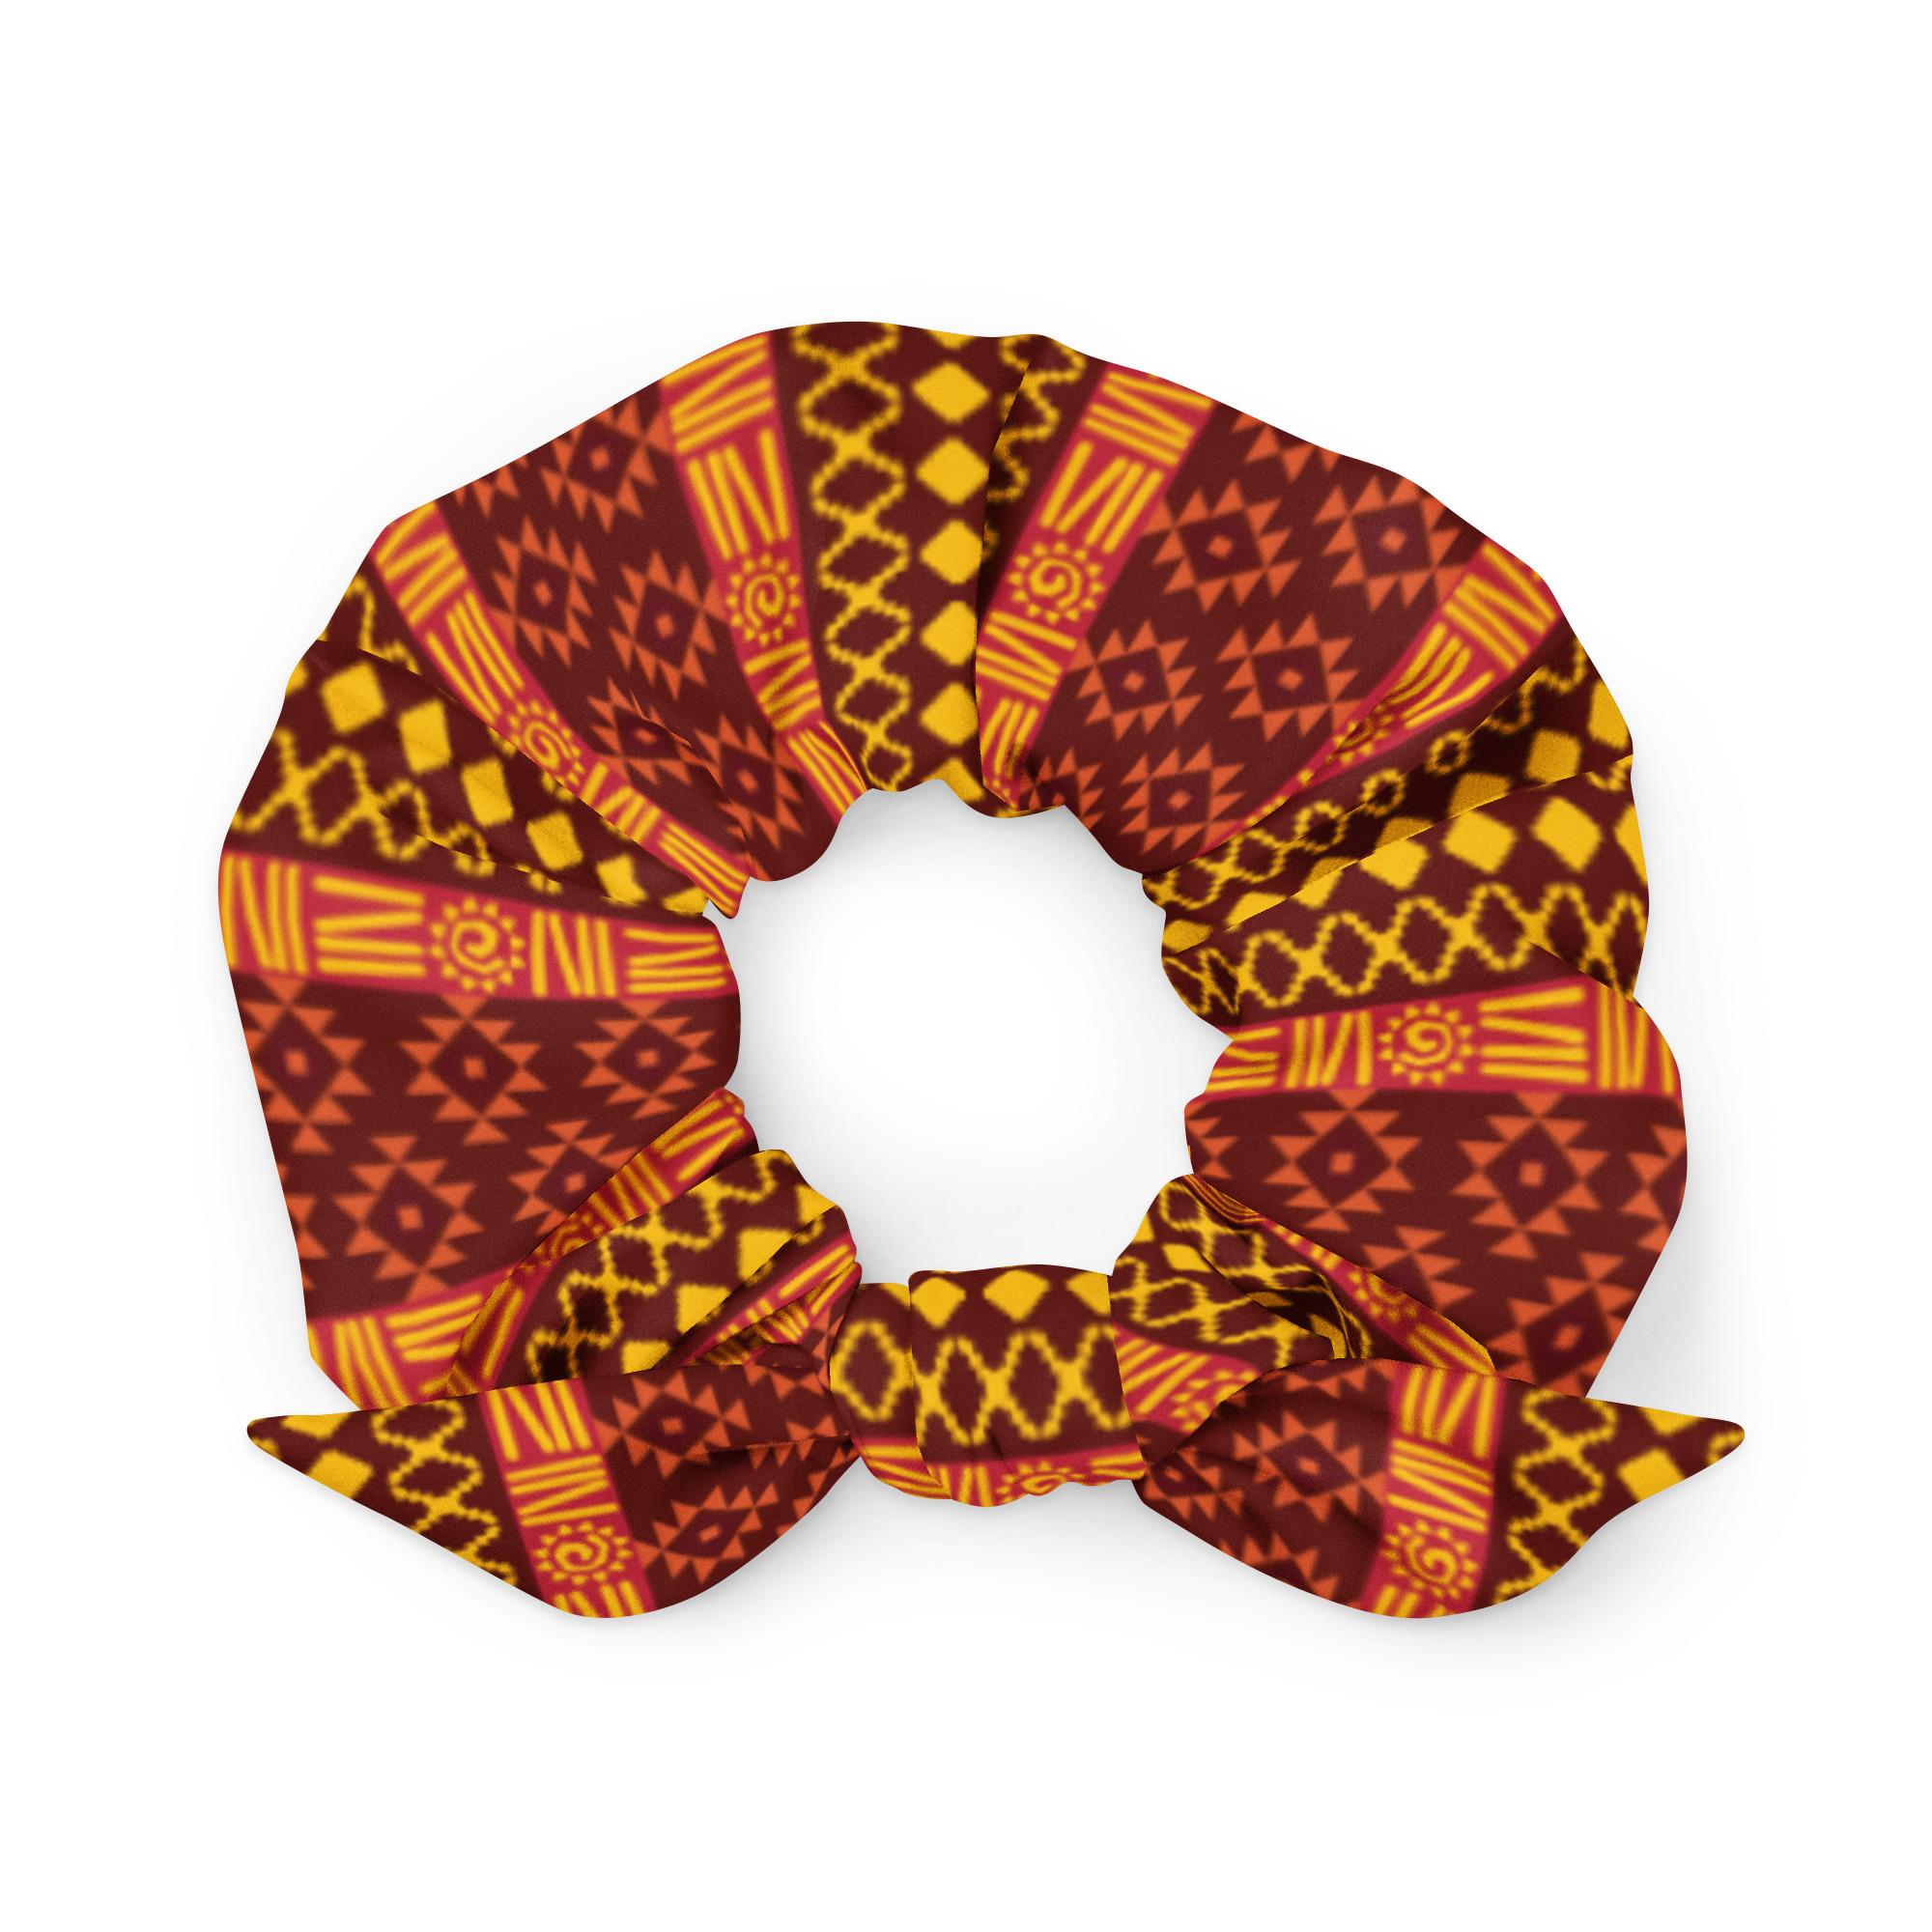 Negozio di cravatte per capelli Scrunchie con stampa cerata Africa